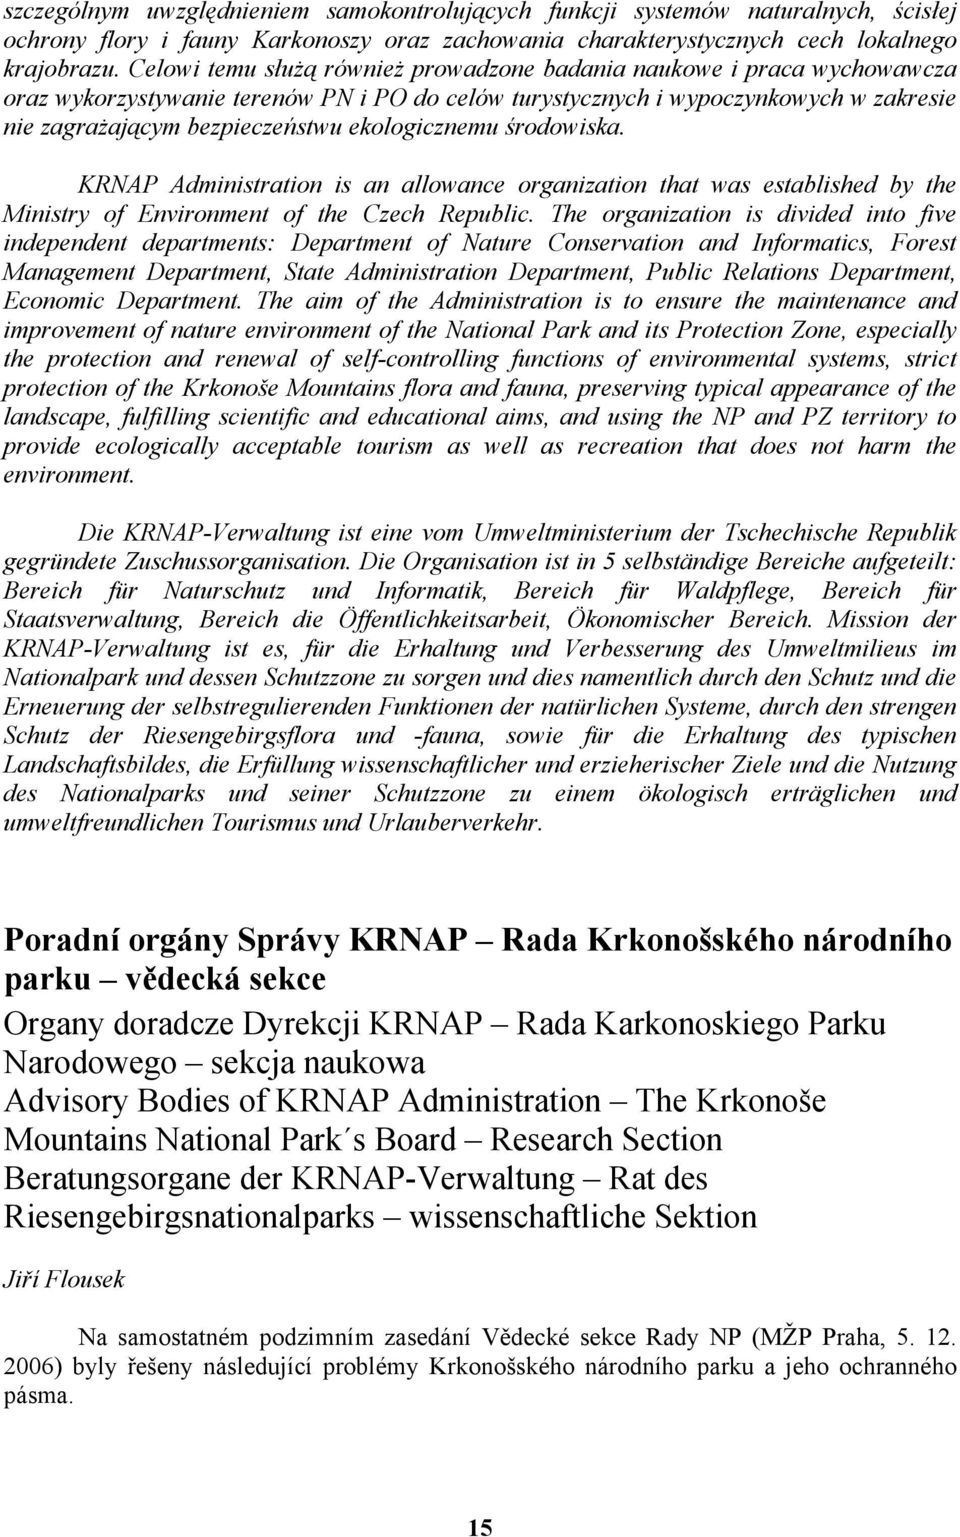 ekologicznemu środowiska. KRNAP Administration is an allowance organization that was established by the Ministry of Environment of the Czech Republic.